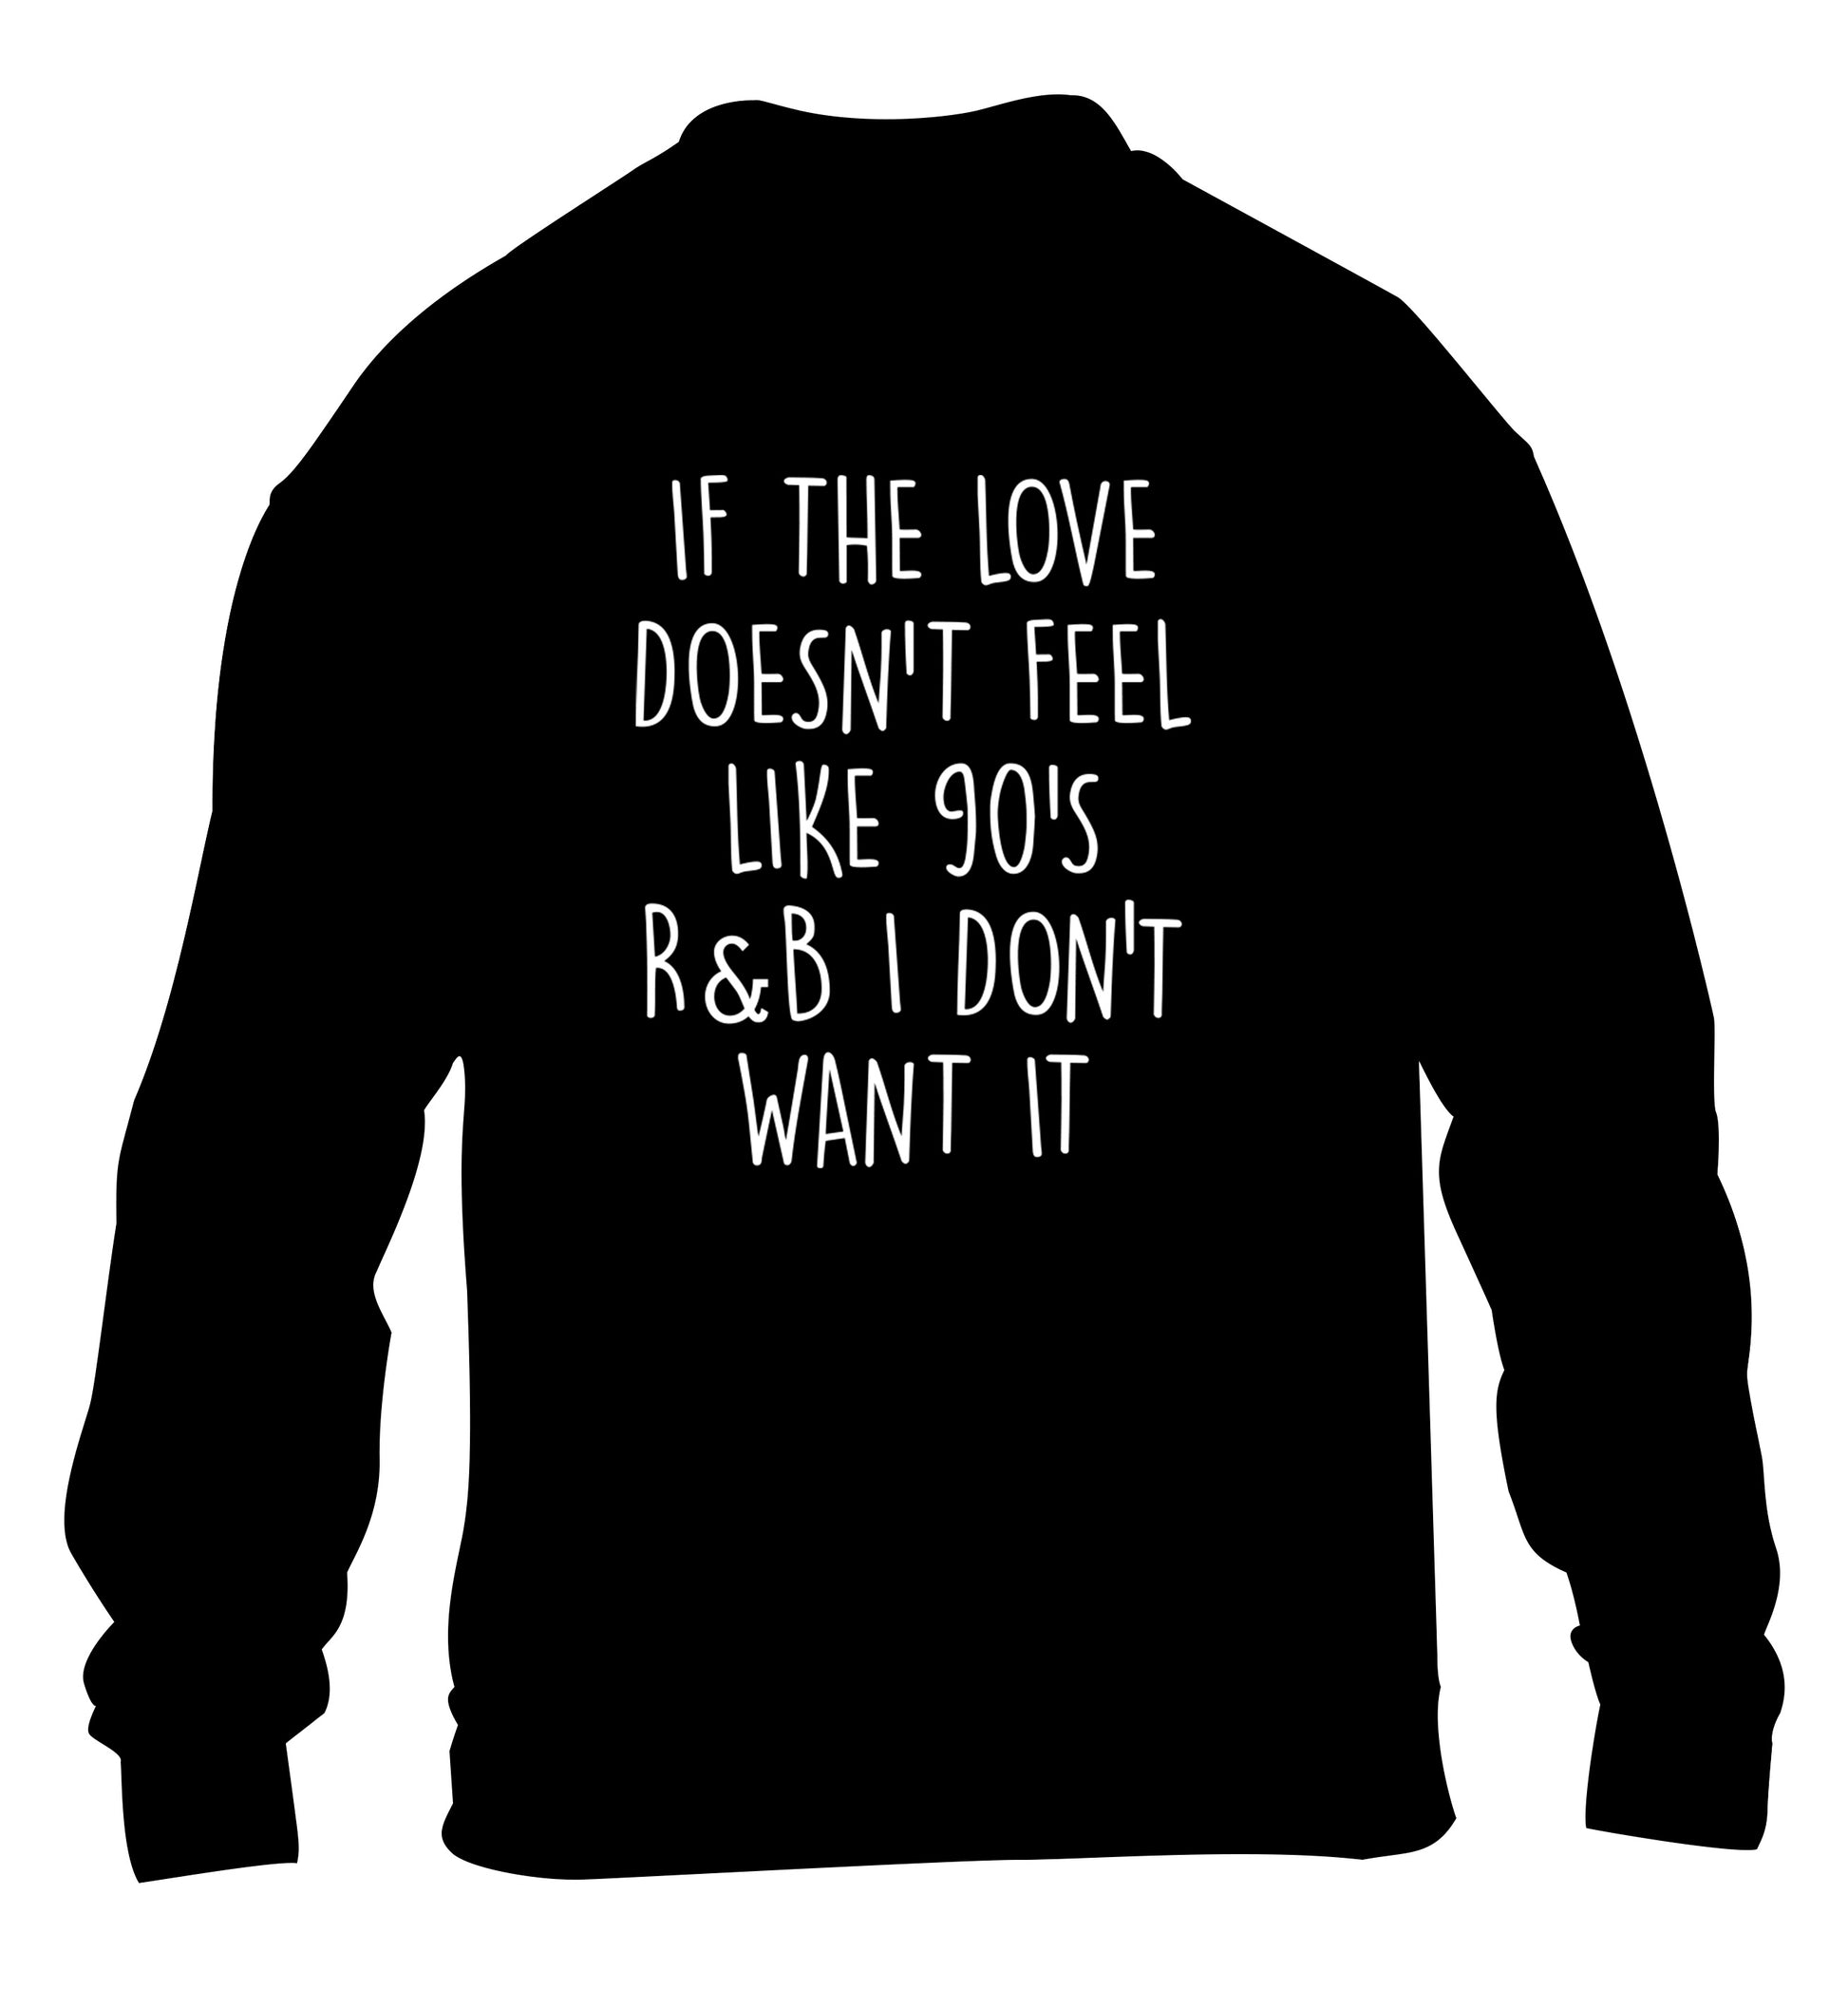 If the love doesn't feel like 90's R&B I don't want it children's black sweater 12-14 Years